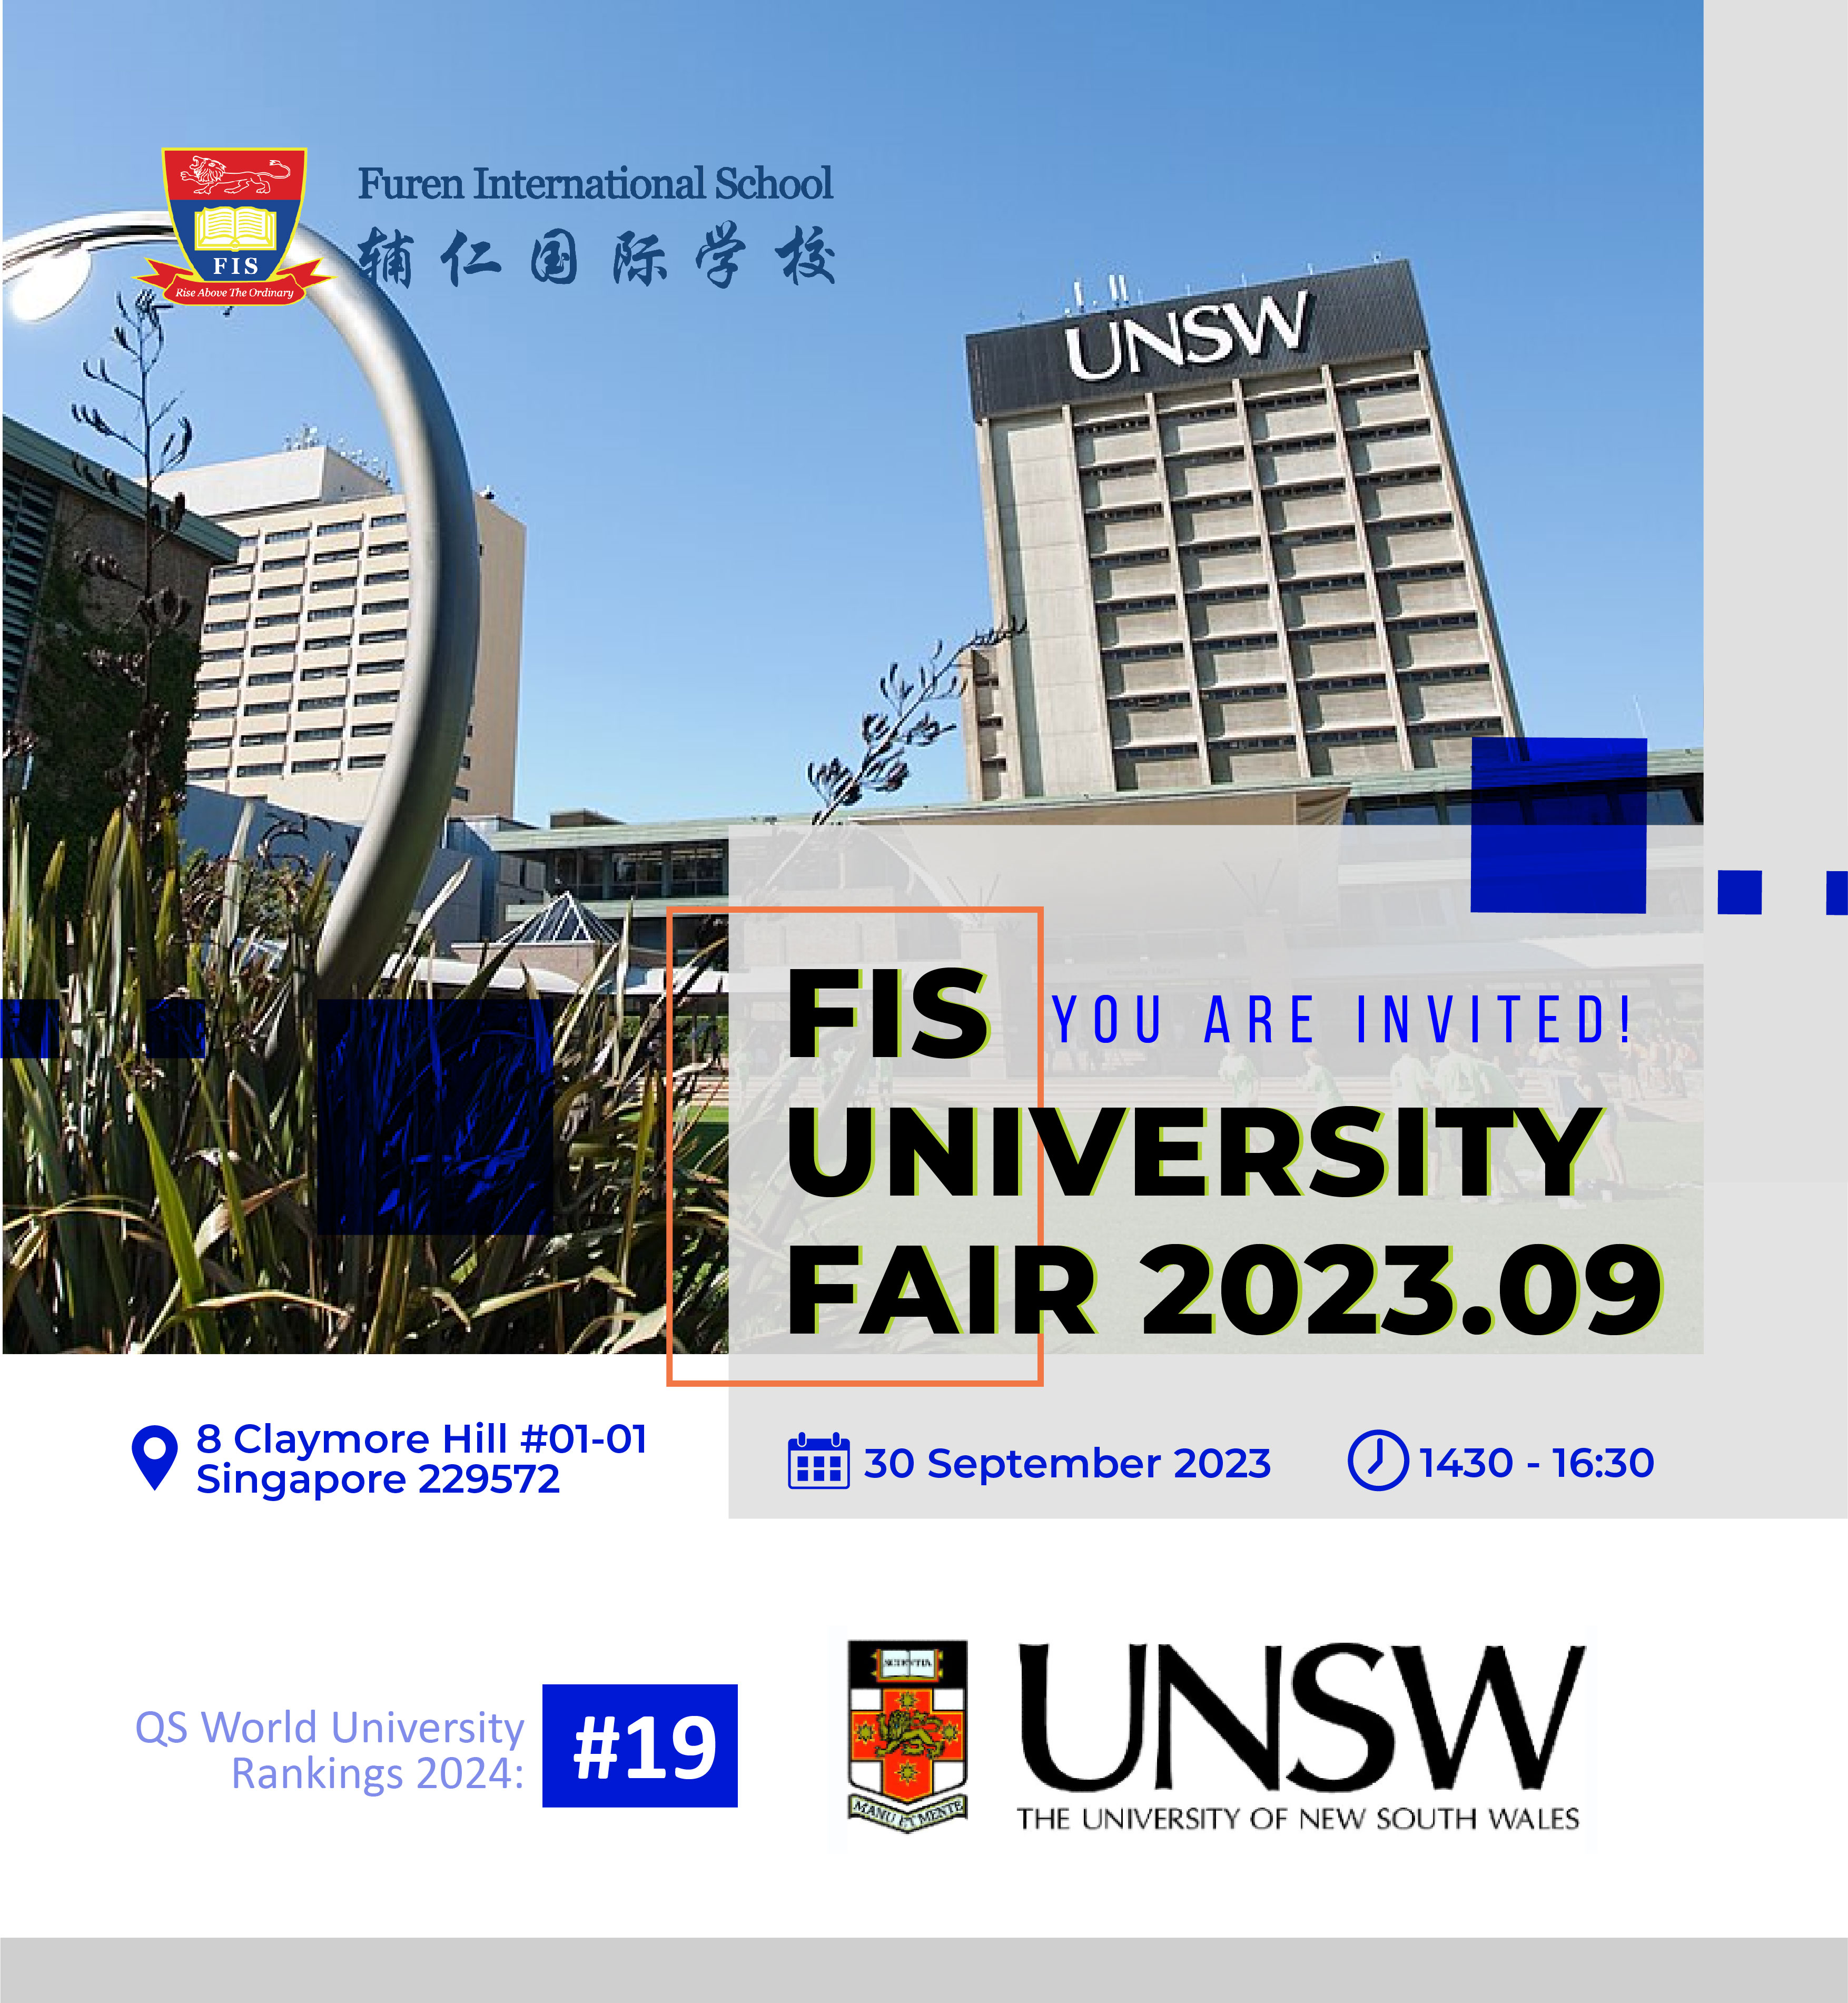 FIS University Fair – University of New South Wales